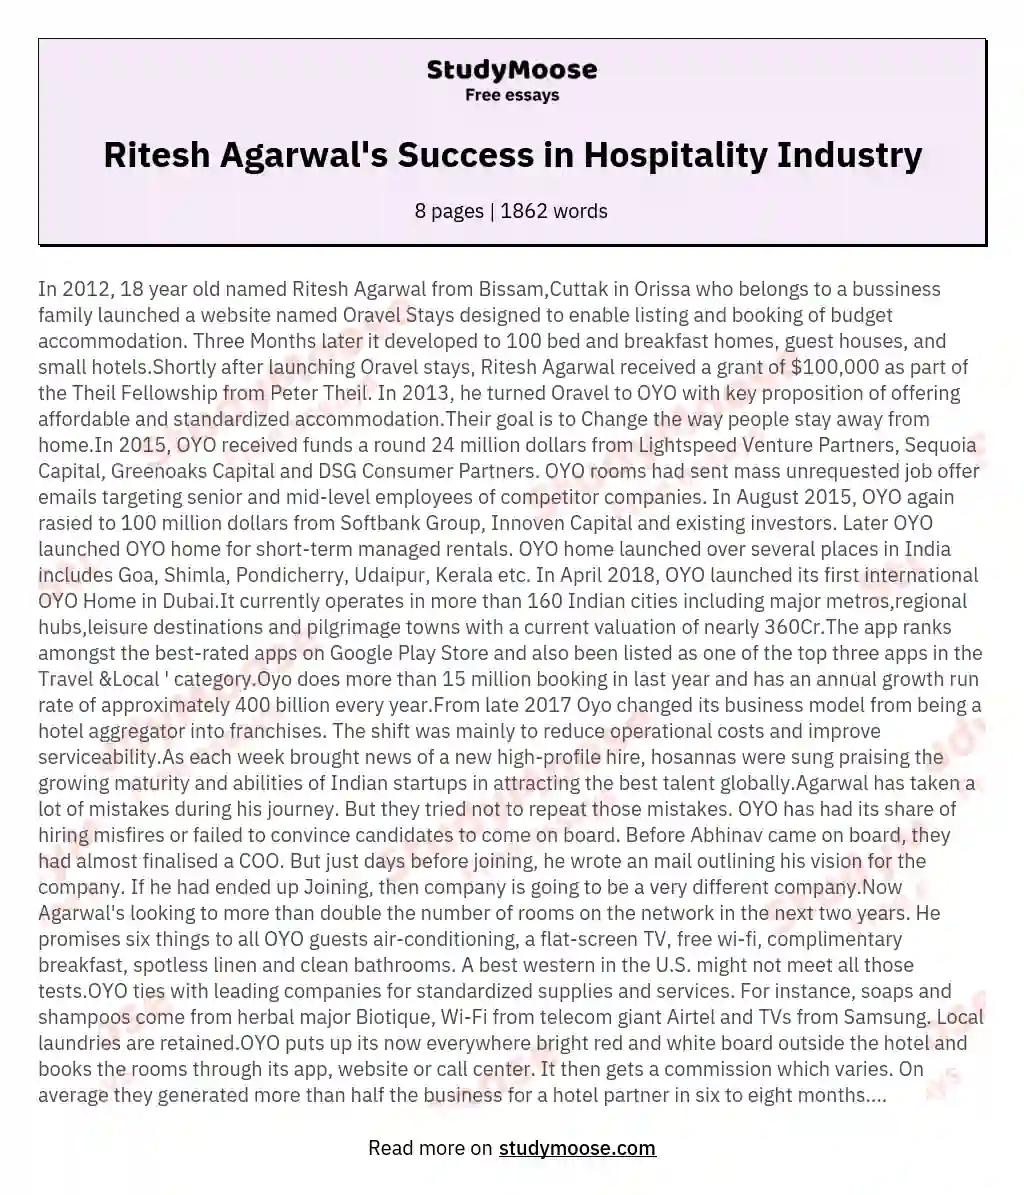 Ritesh Agarwal's Success in Hospitality Industry essay